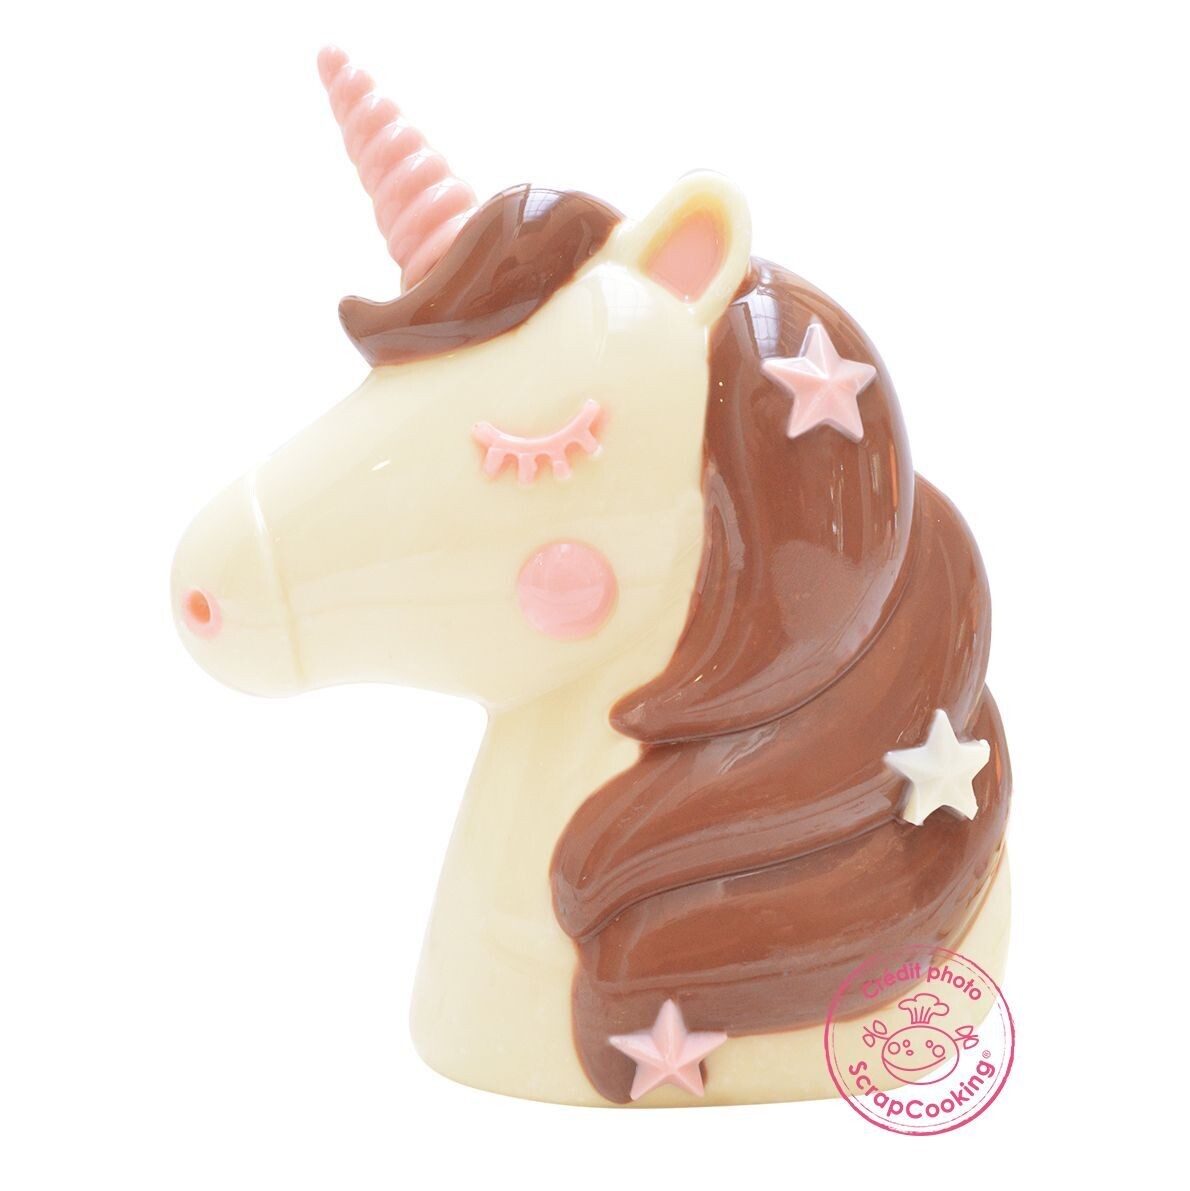 SALE!!! Scrapcooking 3D Chocolate Mould Unicorn - Πλαστικό Καλούπι για Σοκολατένιο Αυγό Κεφάλι Μονόκερου